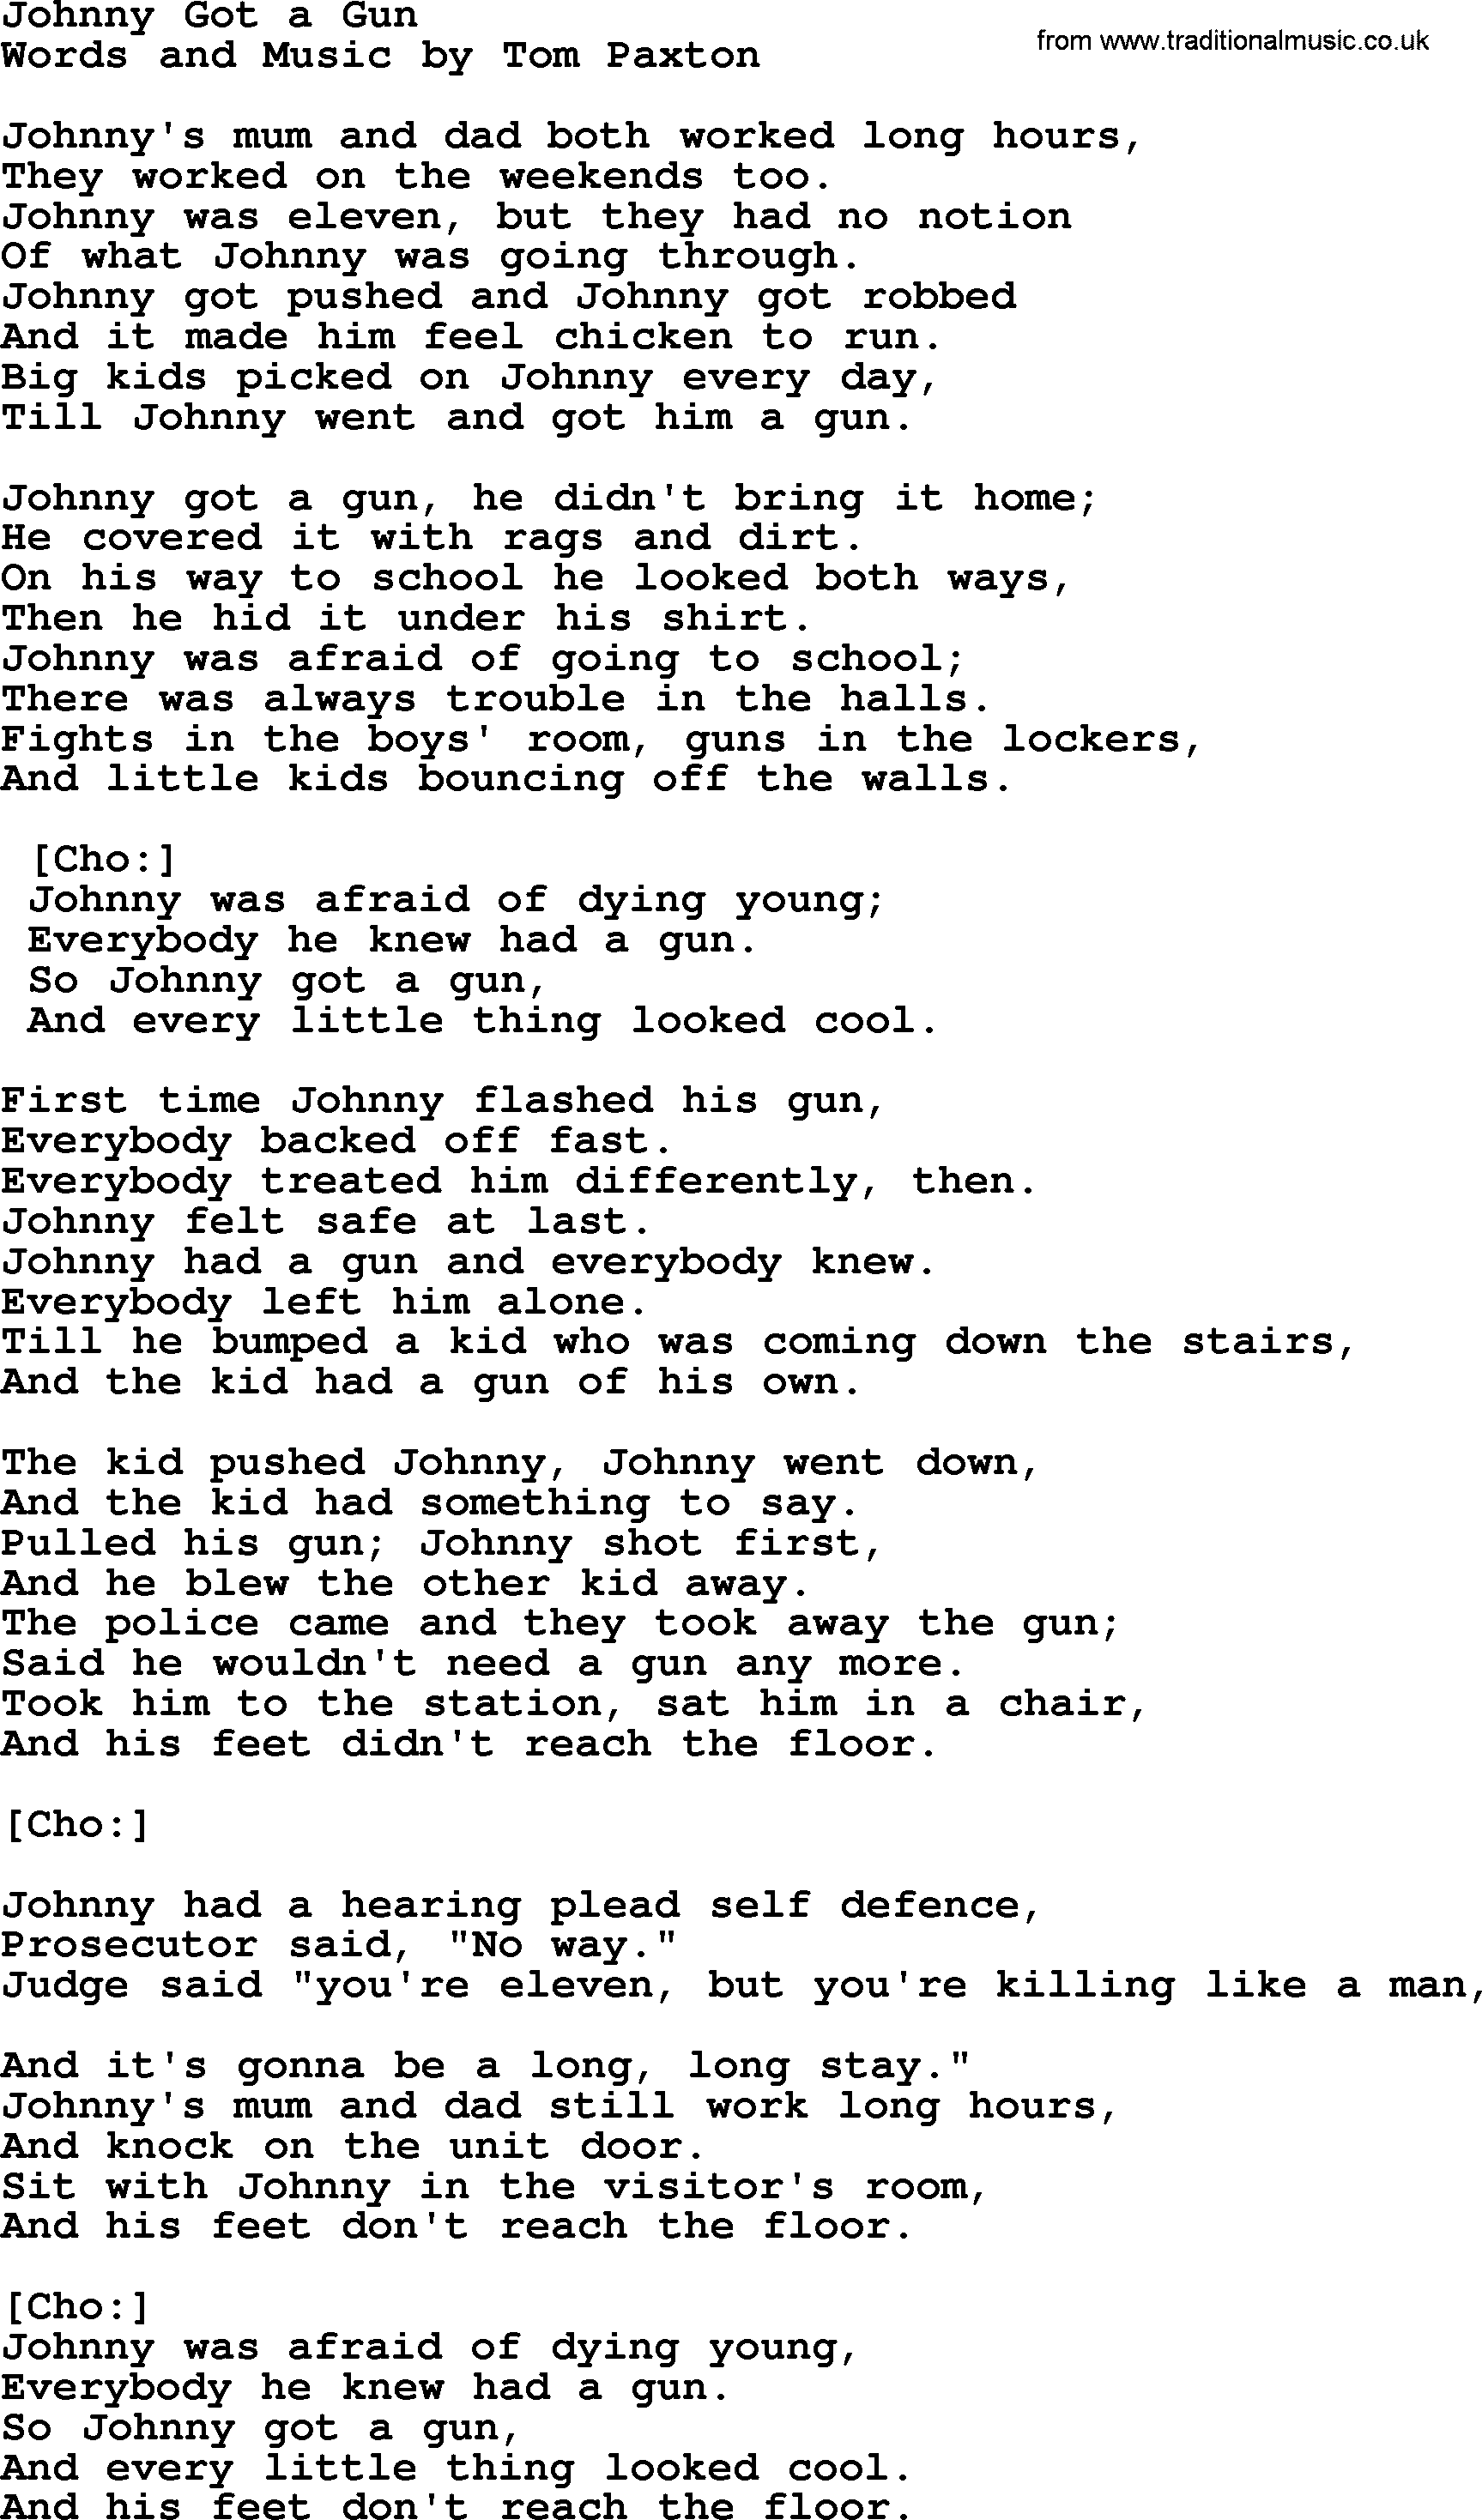 Tom Paxton song: Johnny Got A Gun, lyrics